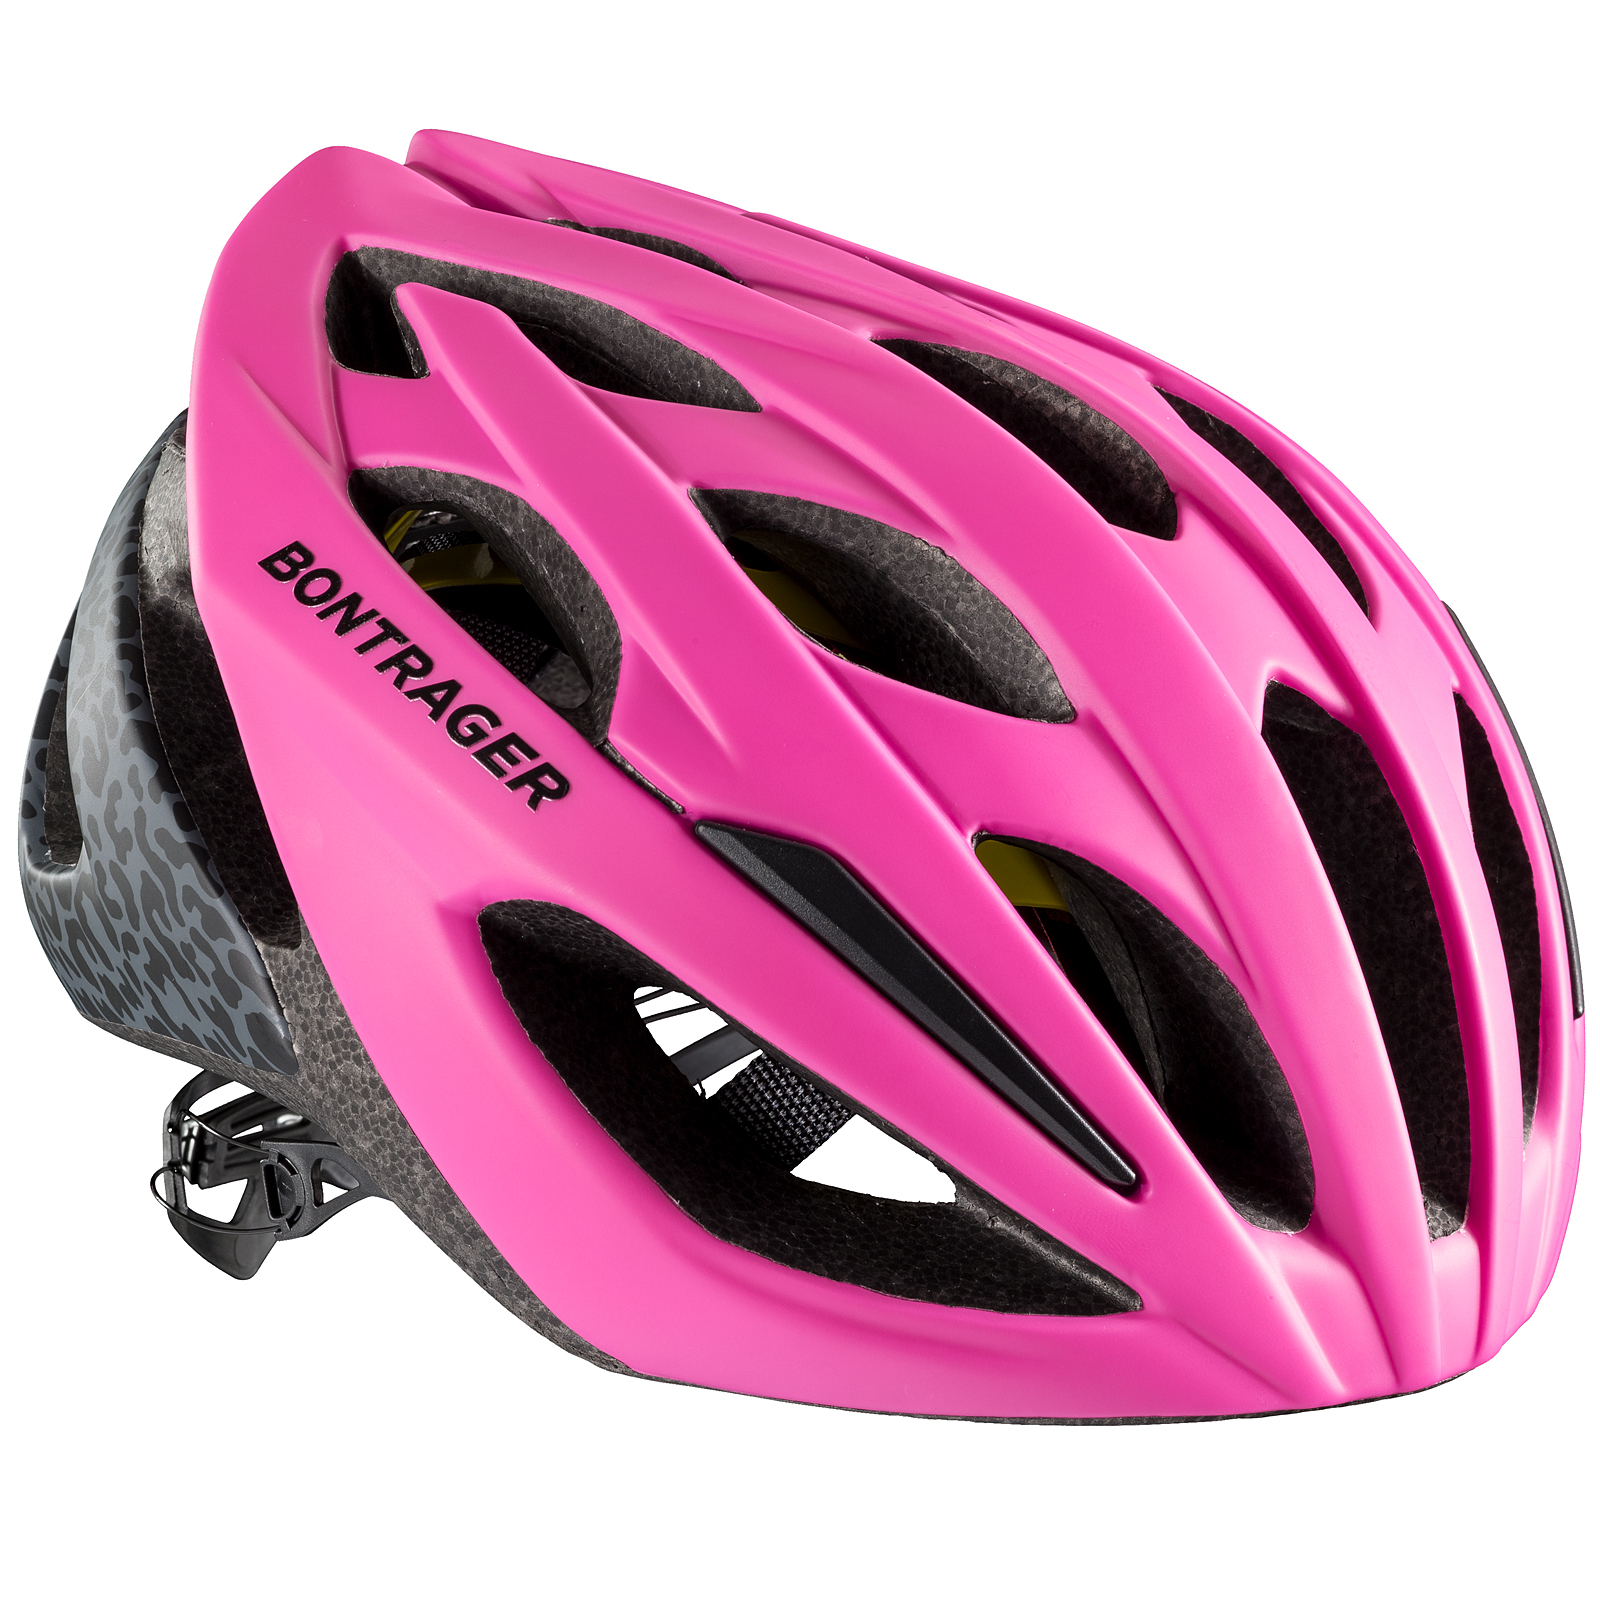 Bontrager Starvos MIPS Damen Rennrad Fahrrad Helm pink